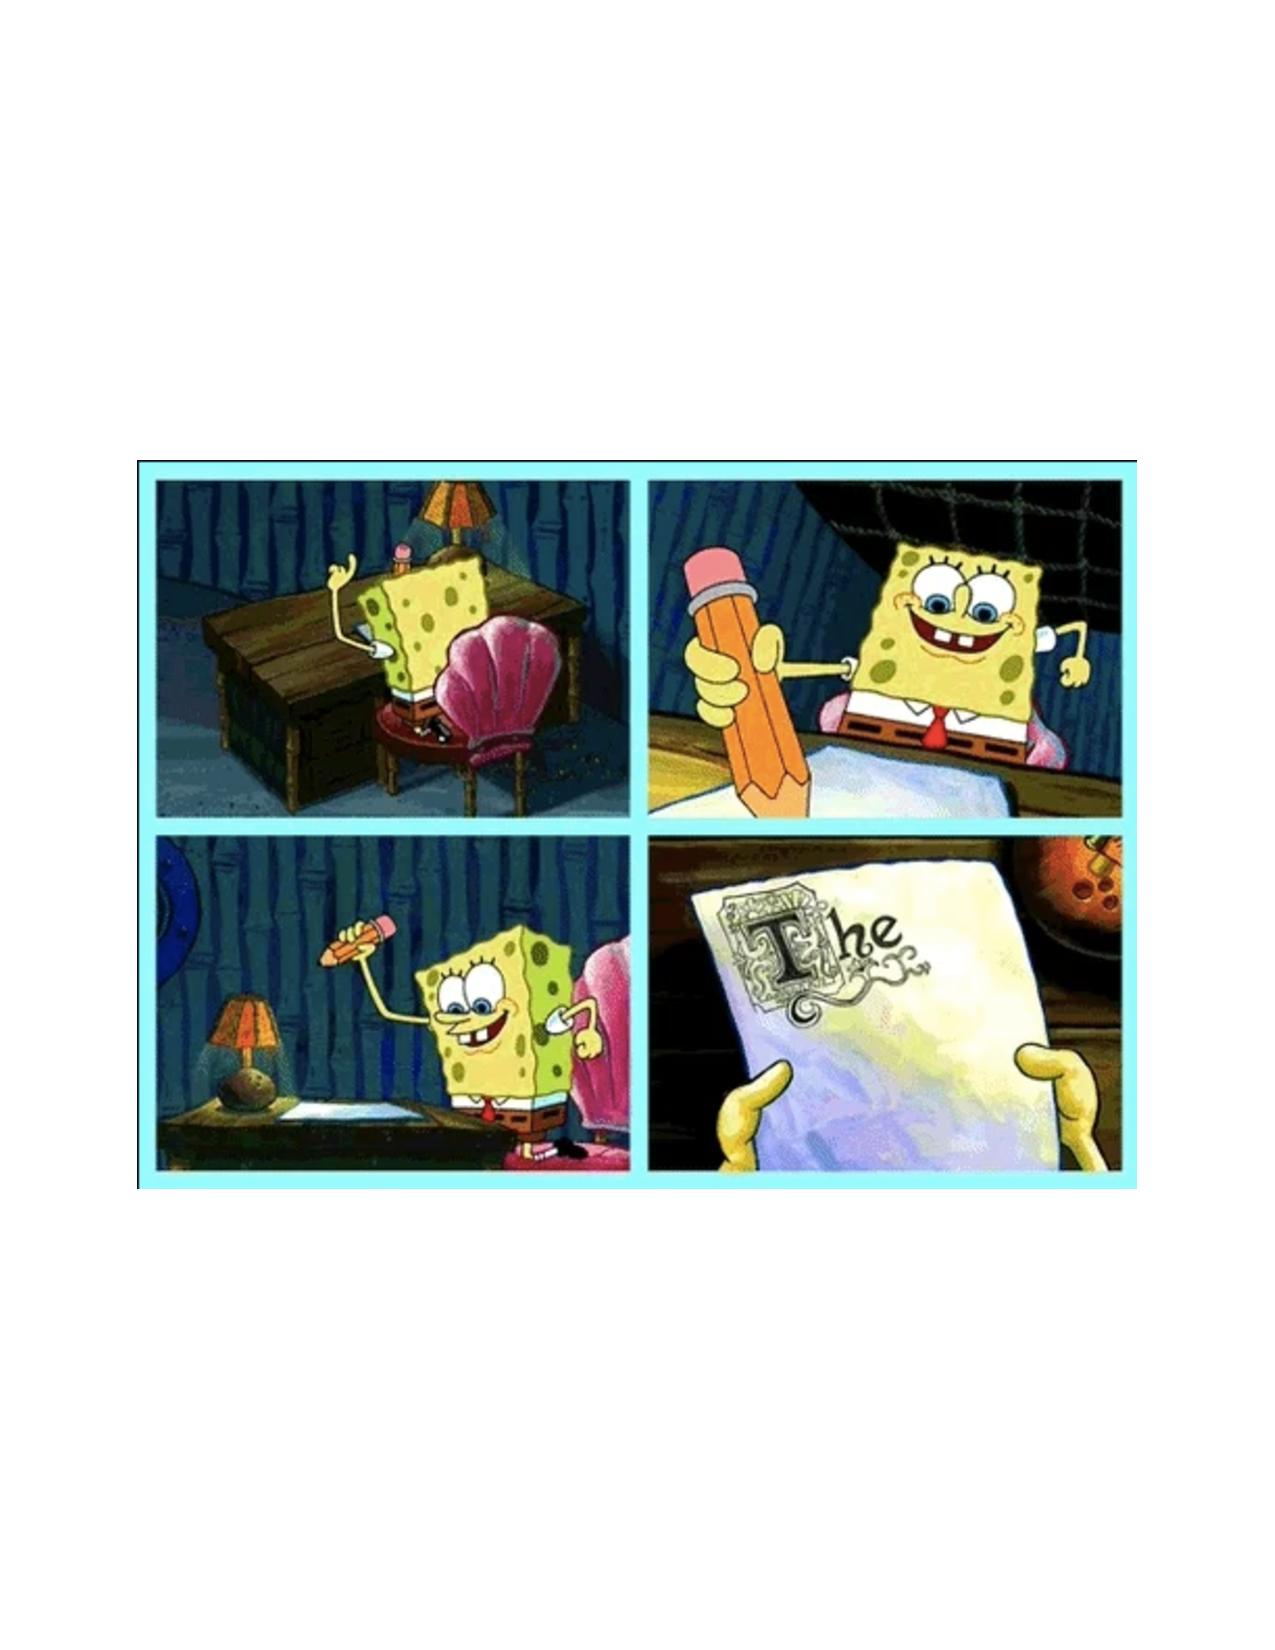 Spongebob Squarepants sitting at a desk preparing to write.